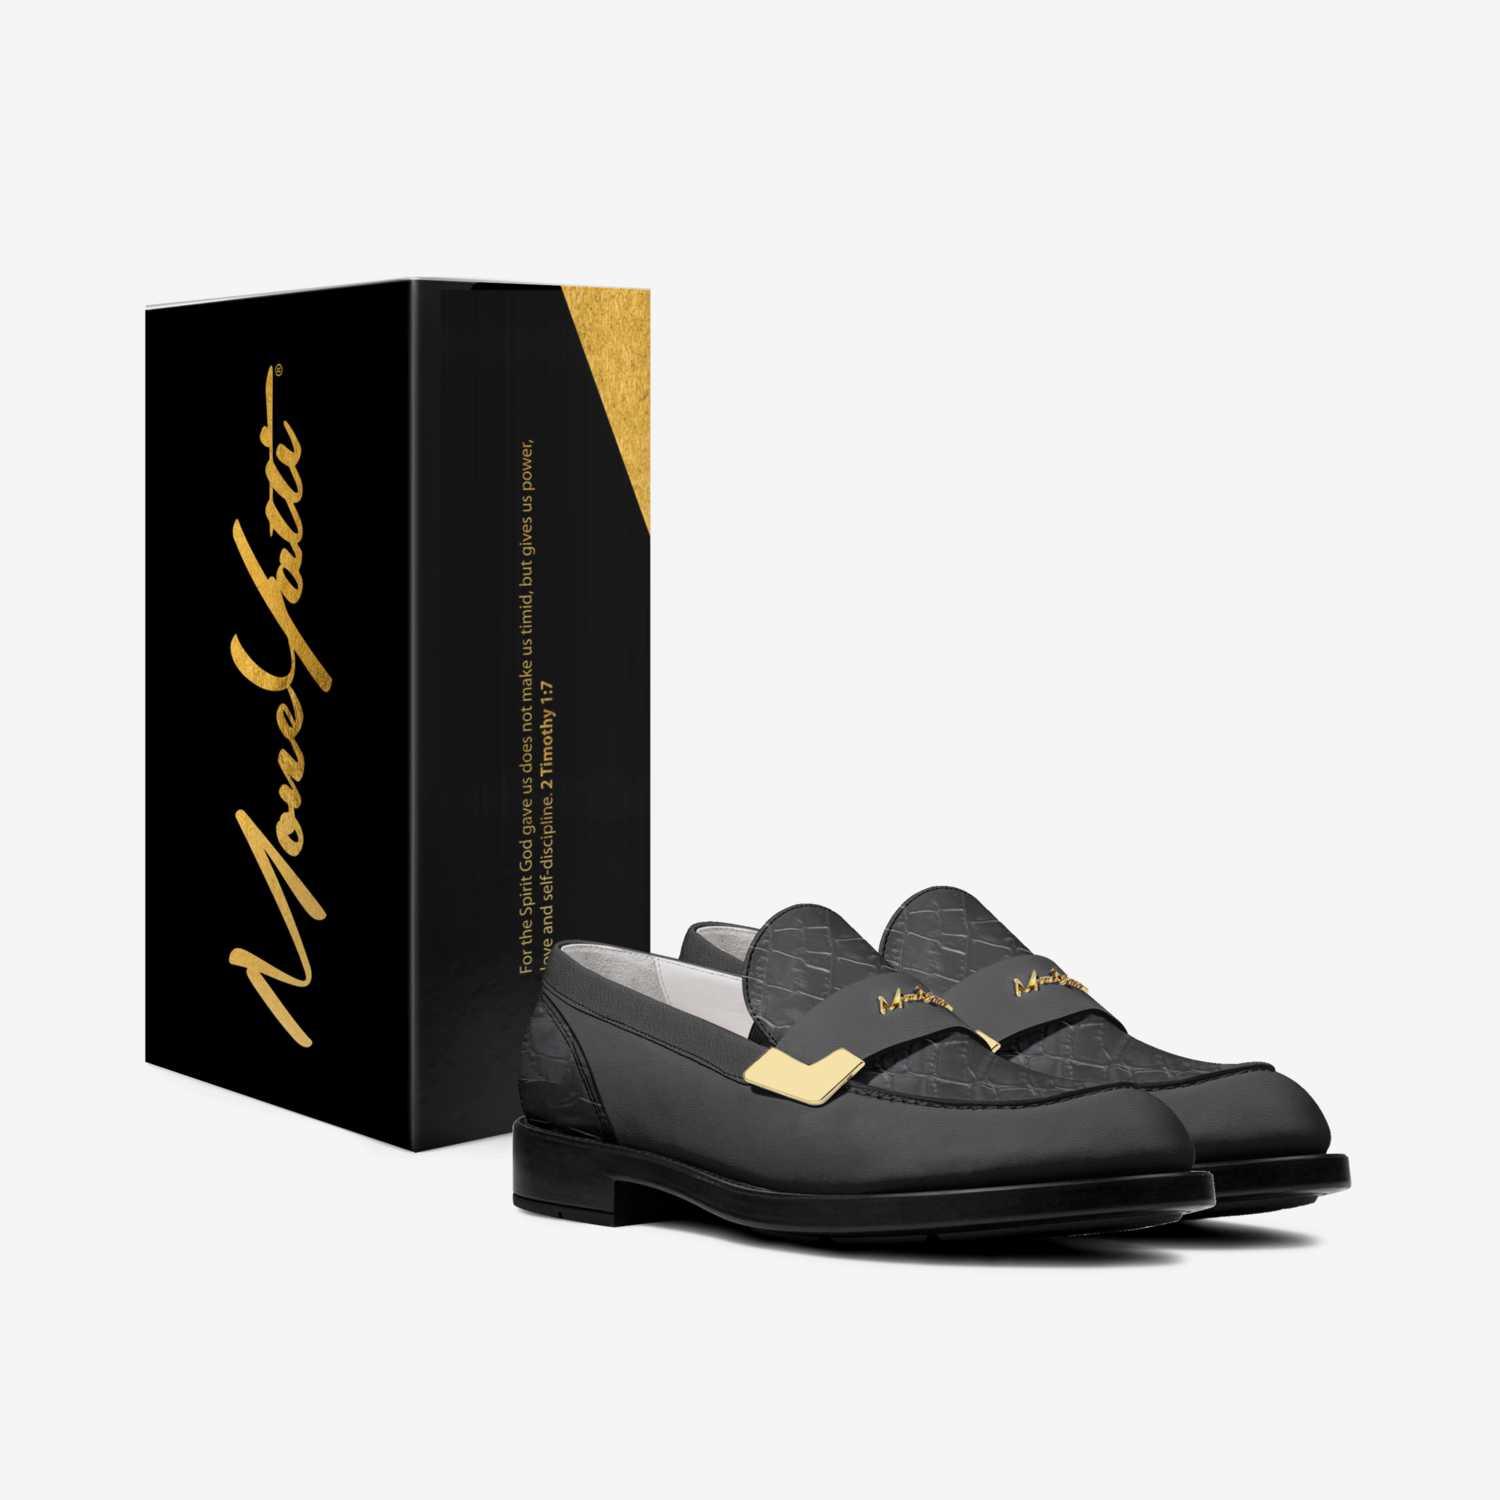 ElegantDrip 012 custom made in Italy shoes by Moneyatti Brand | Box view